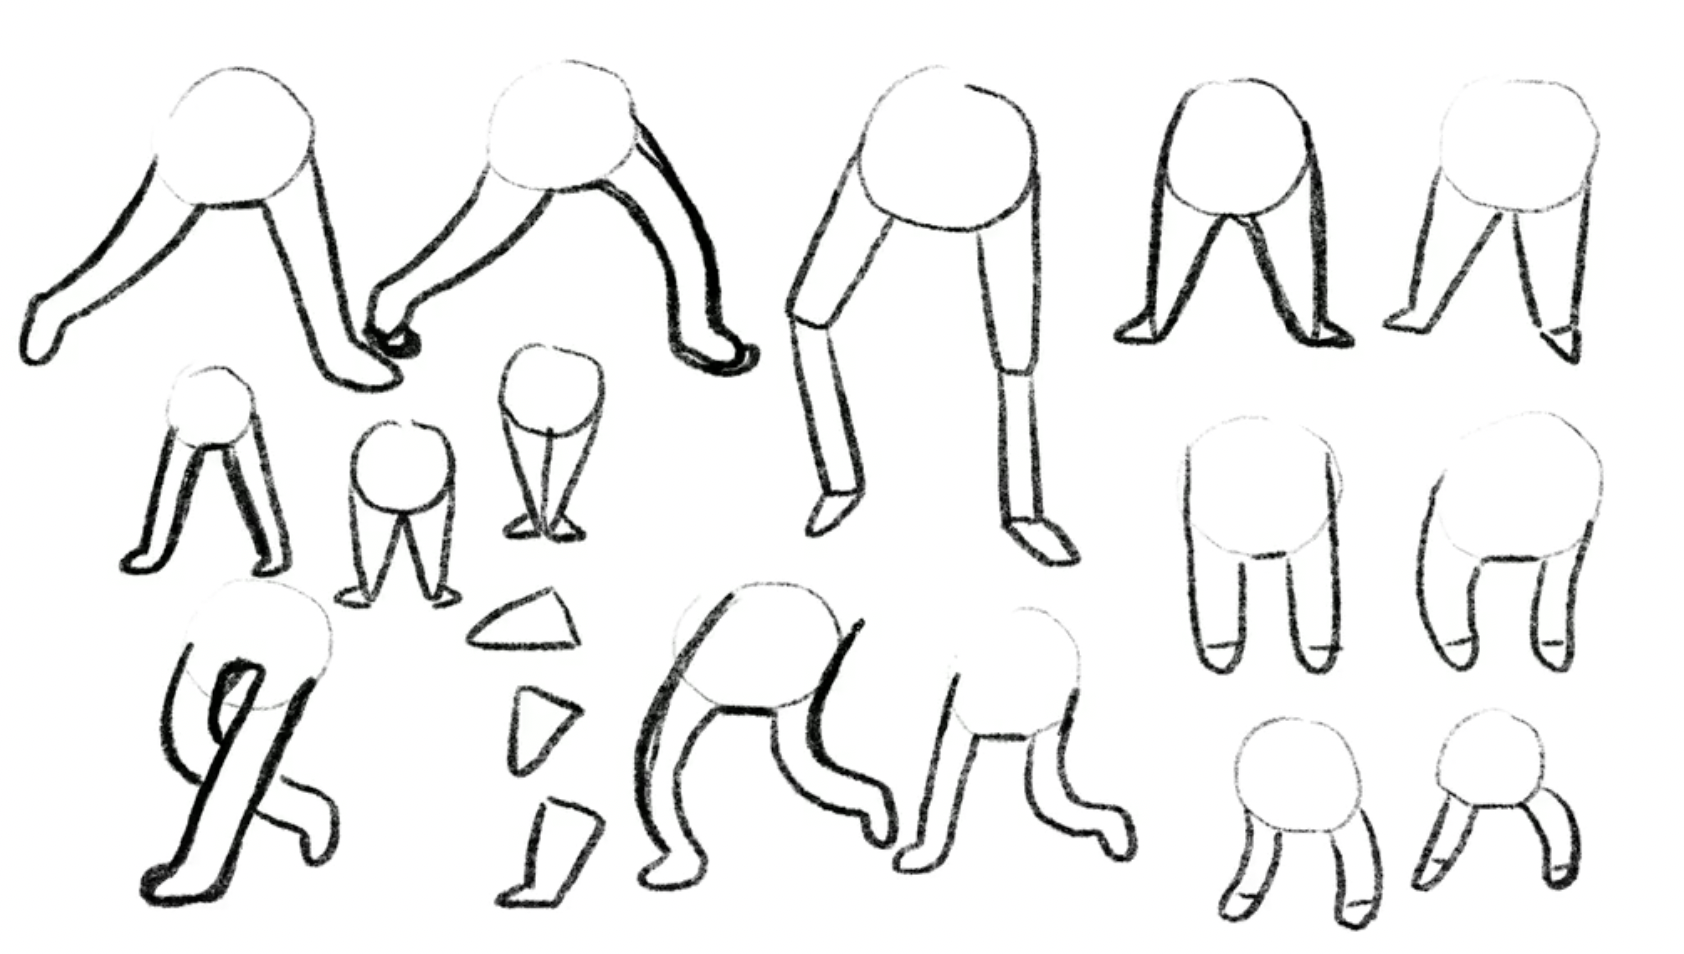 Animals, People and Cartoons: How to Draw Legs | Skillshare Blog